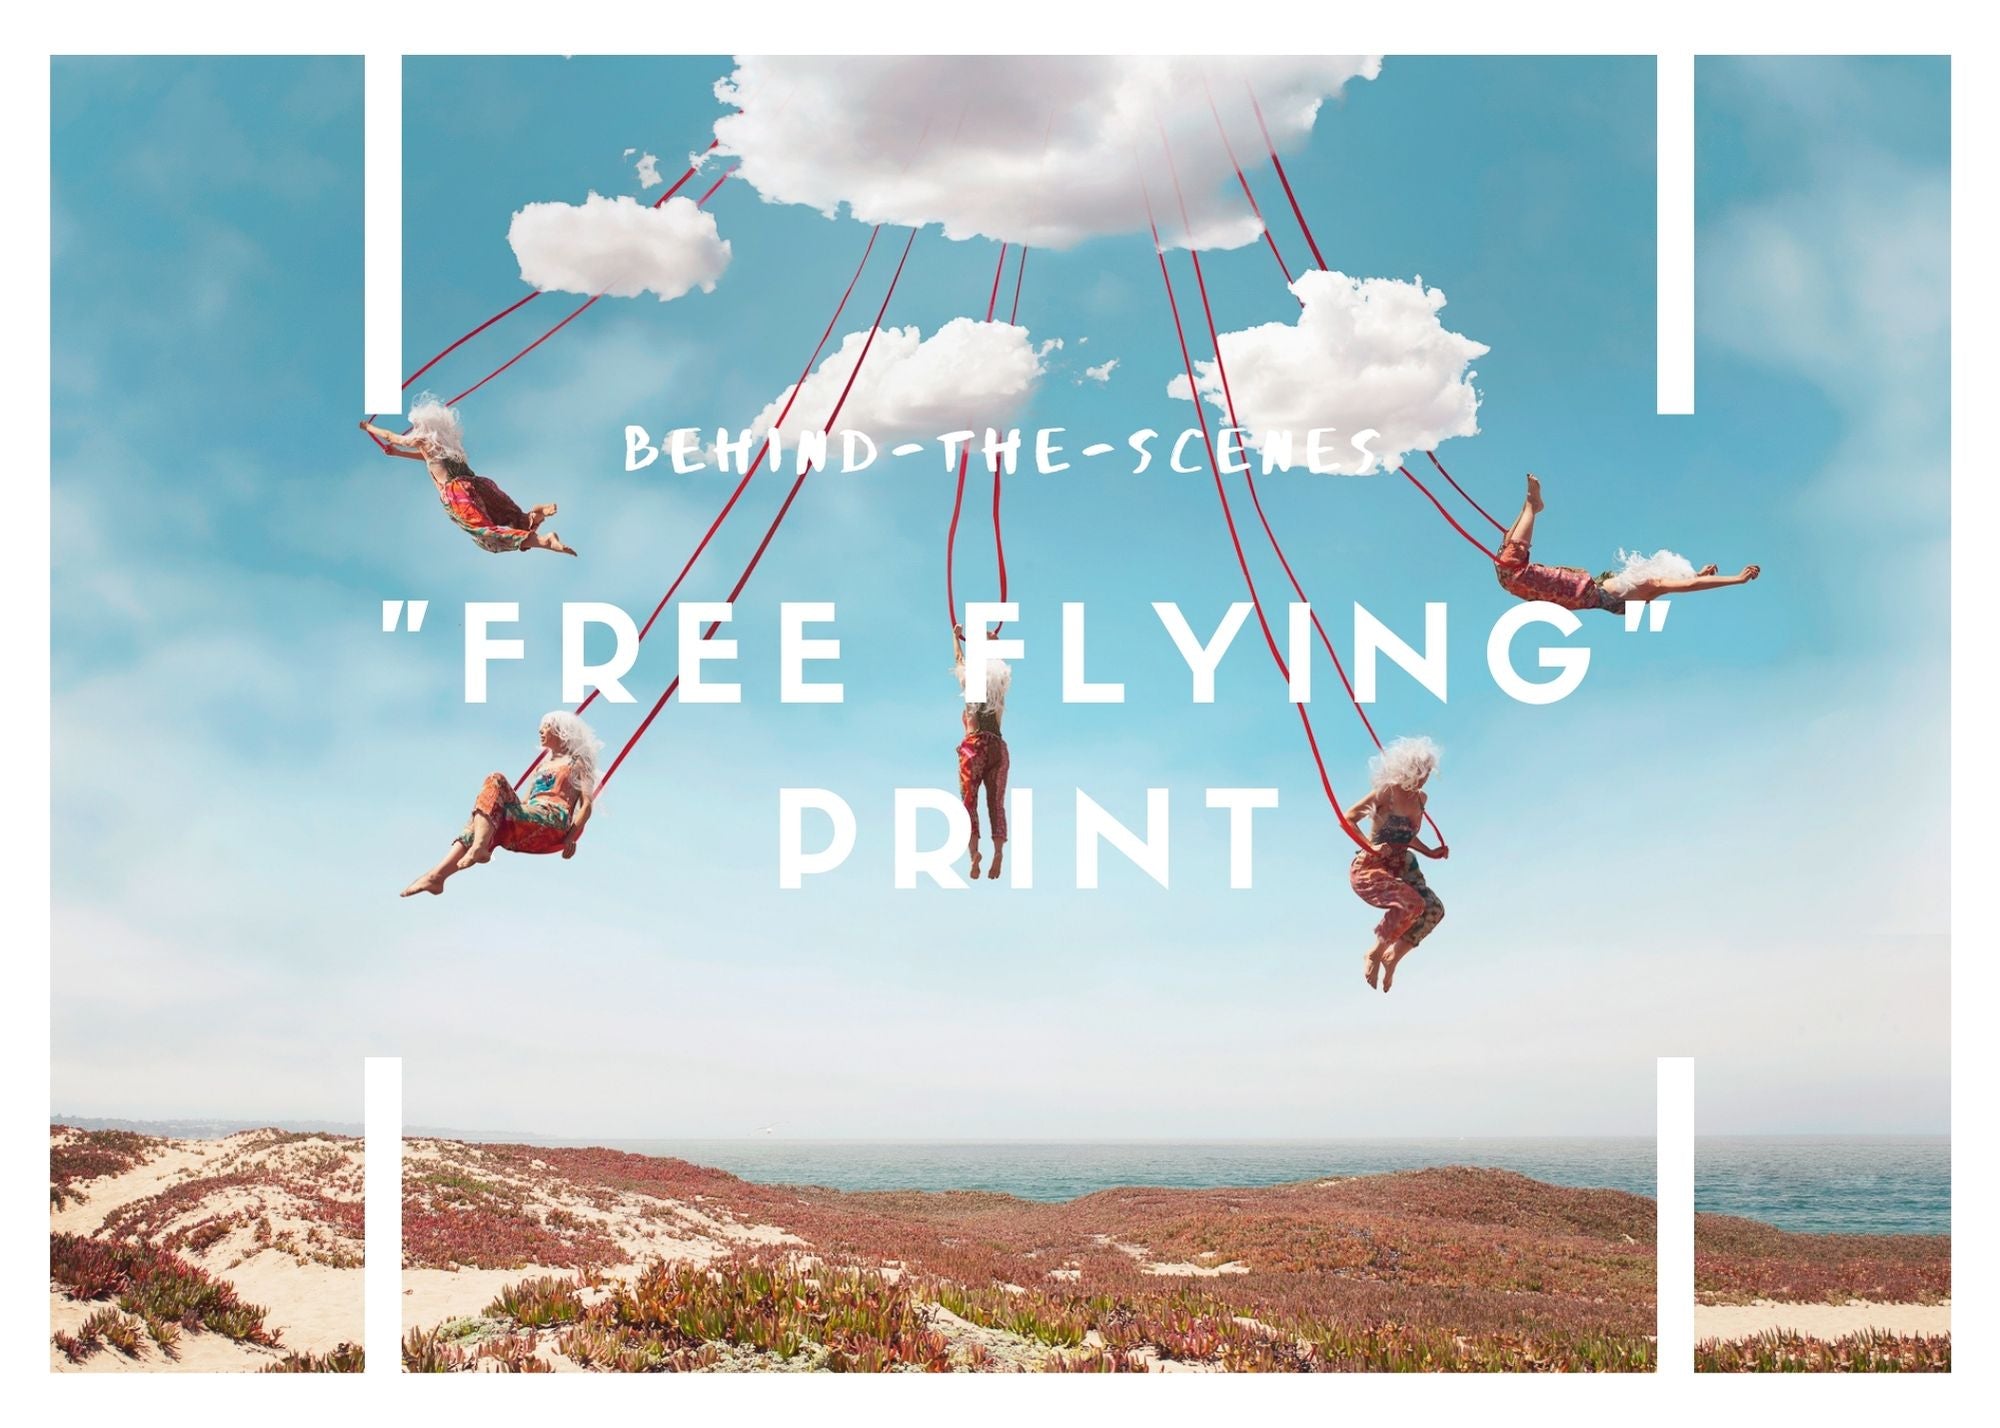 Behind The Scenes: "Flying Free"